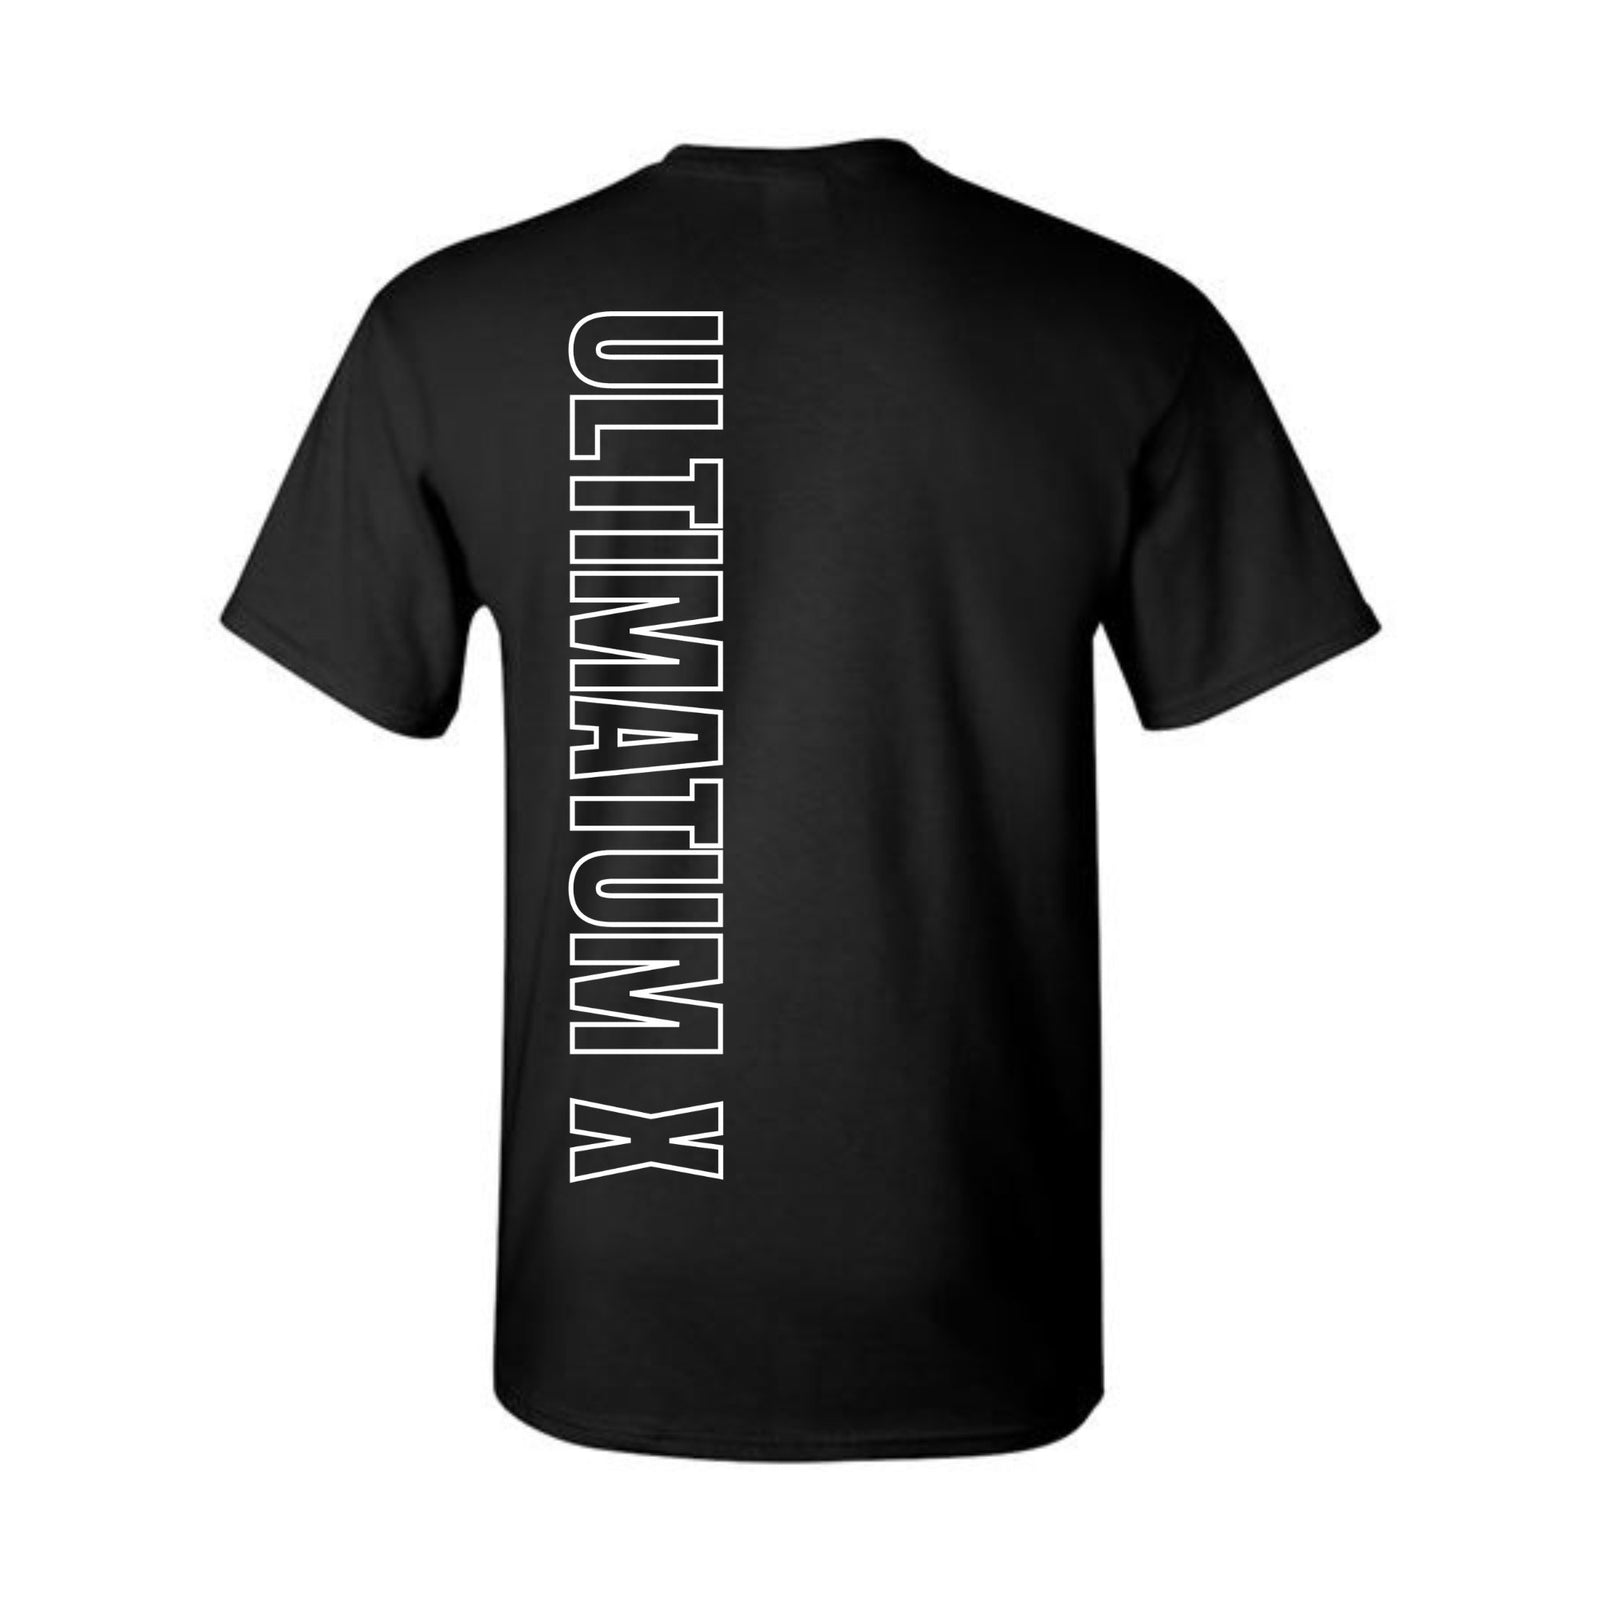 Commitment Gym T-Shirt - ULTIMATUM X